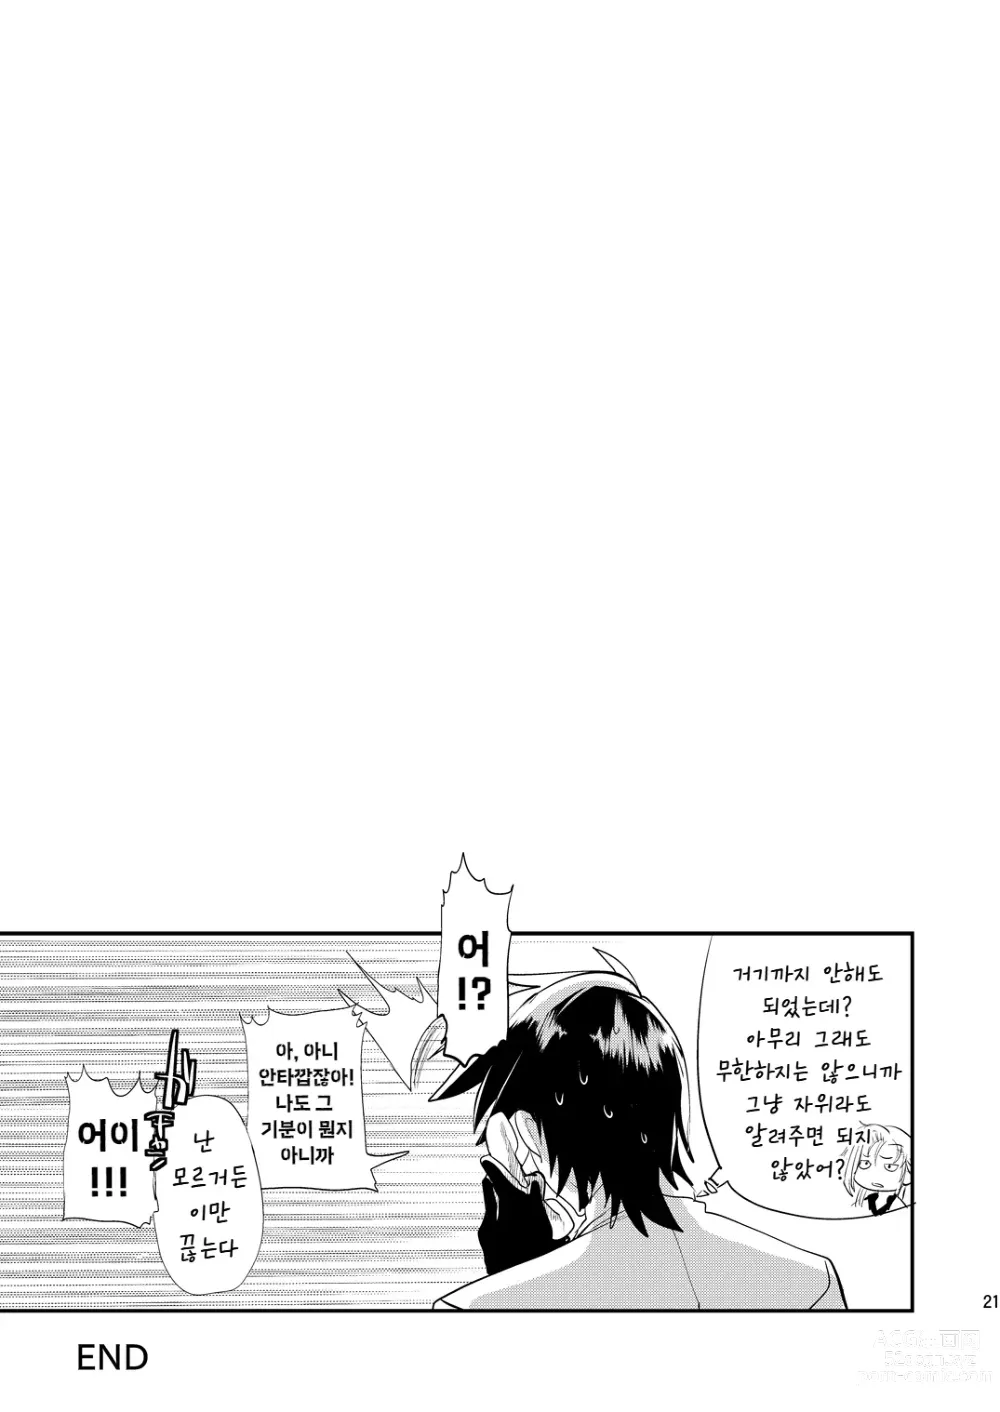 Page 21 of doujinshi 면귀매옥